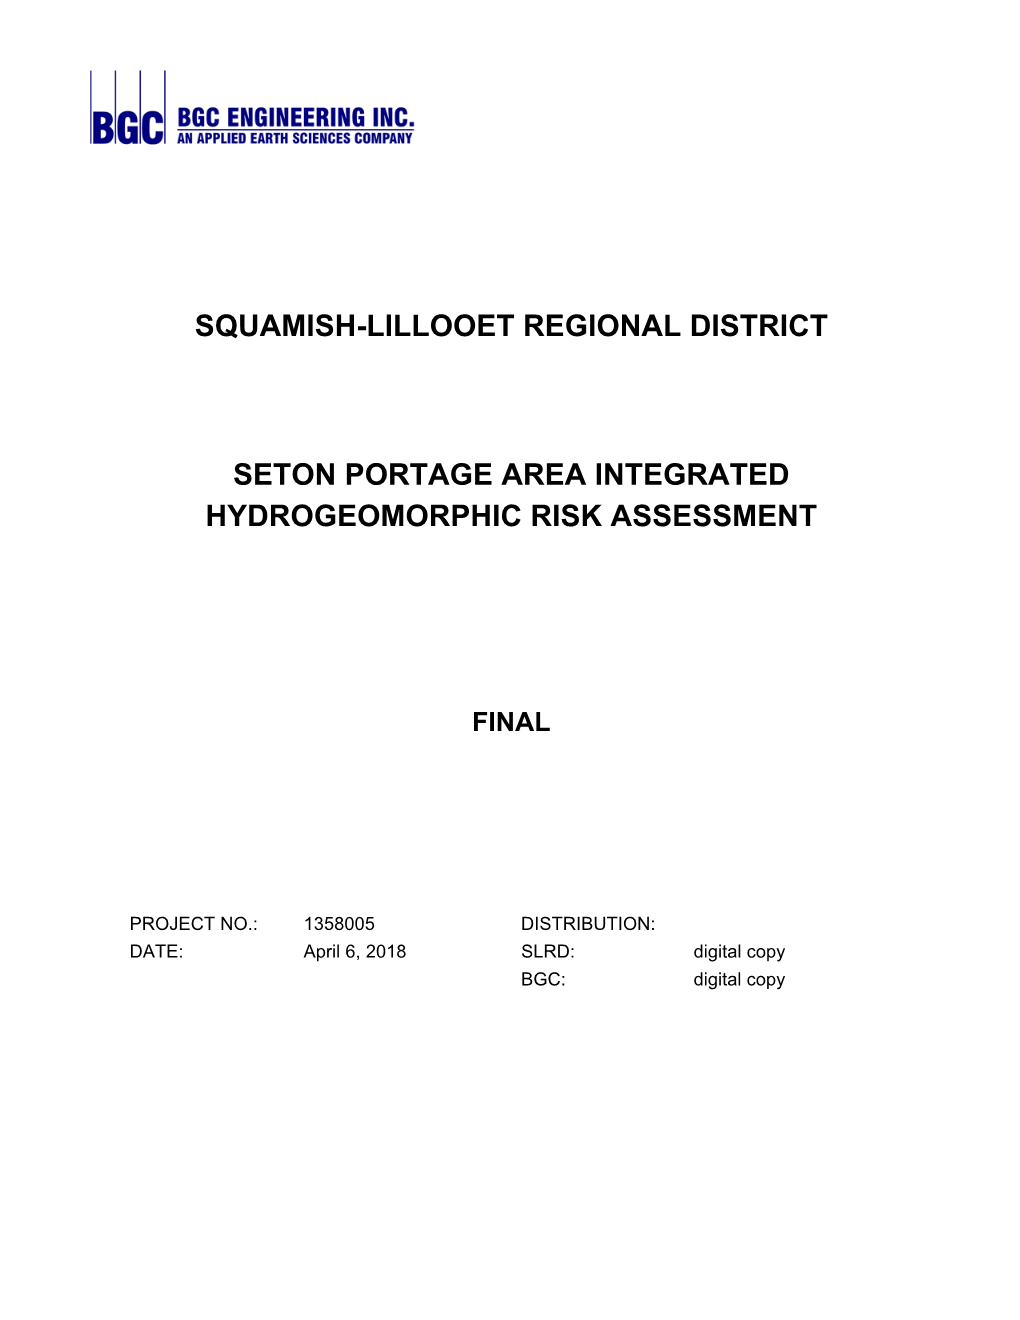 Seton Portage Area Integrated Hydrogeomorphic Risk Assessment